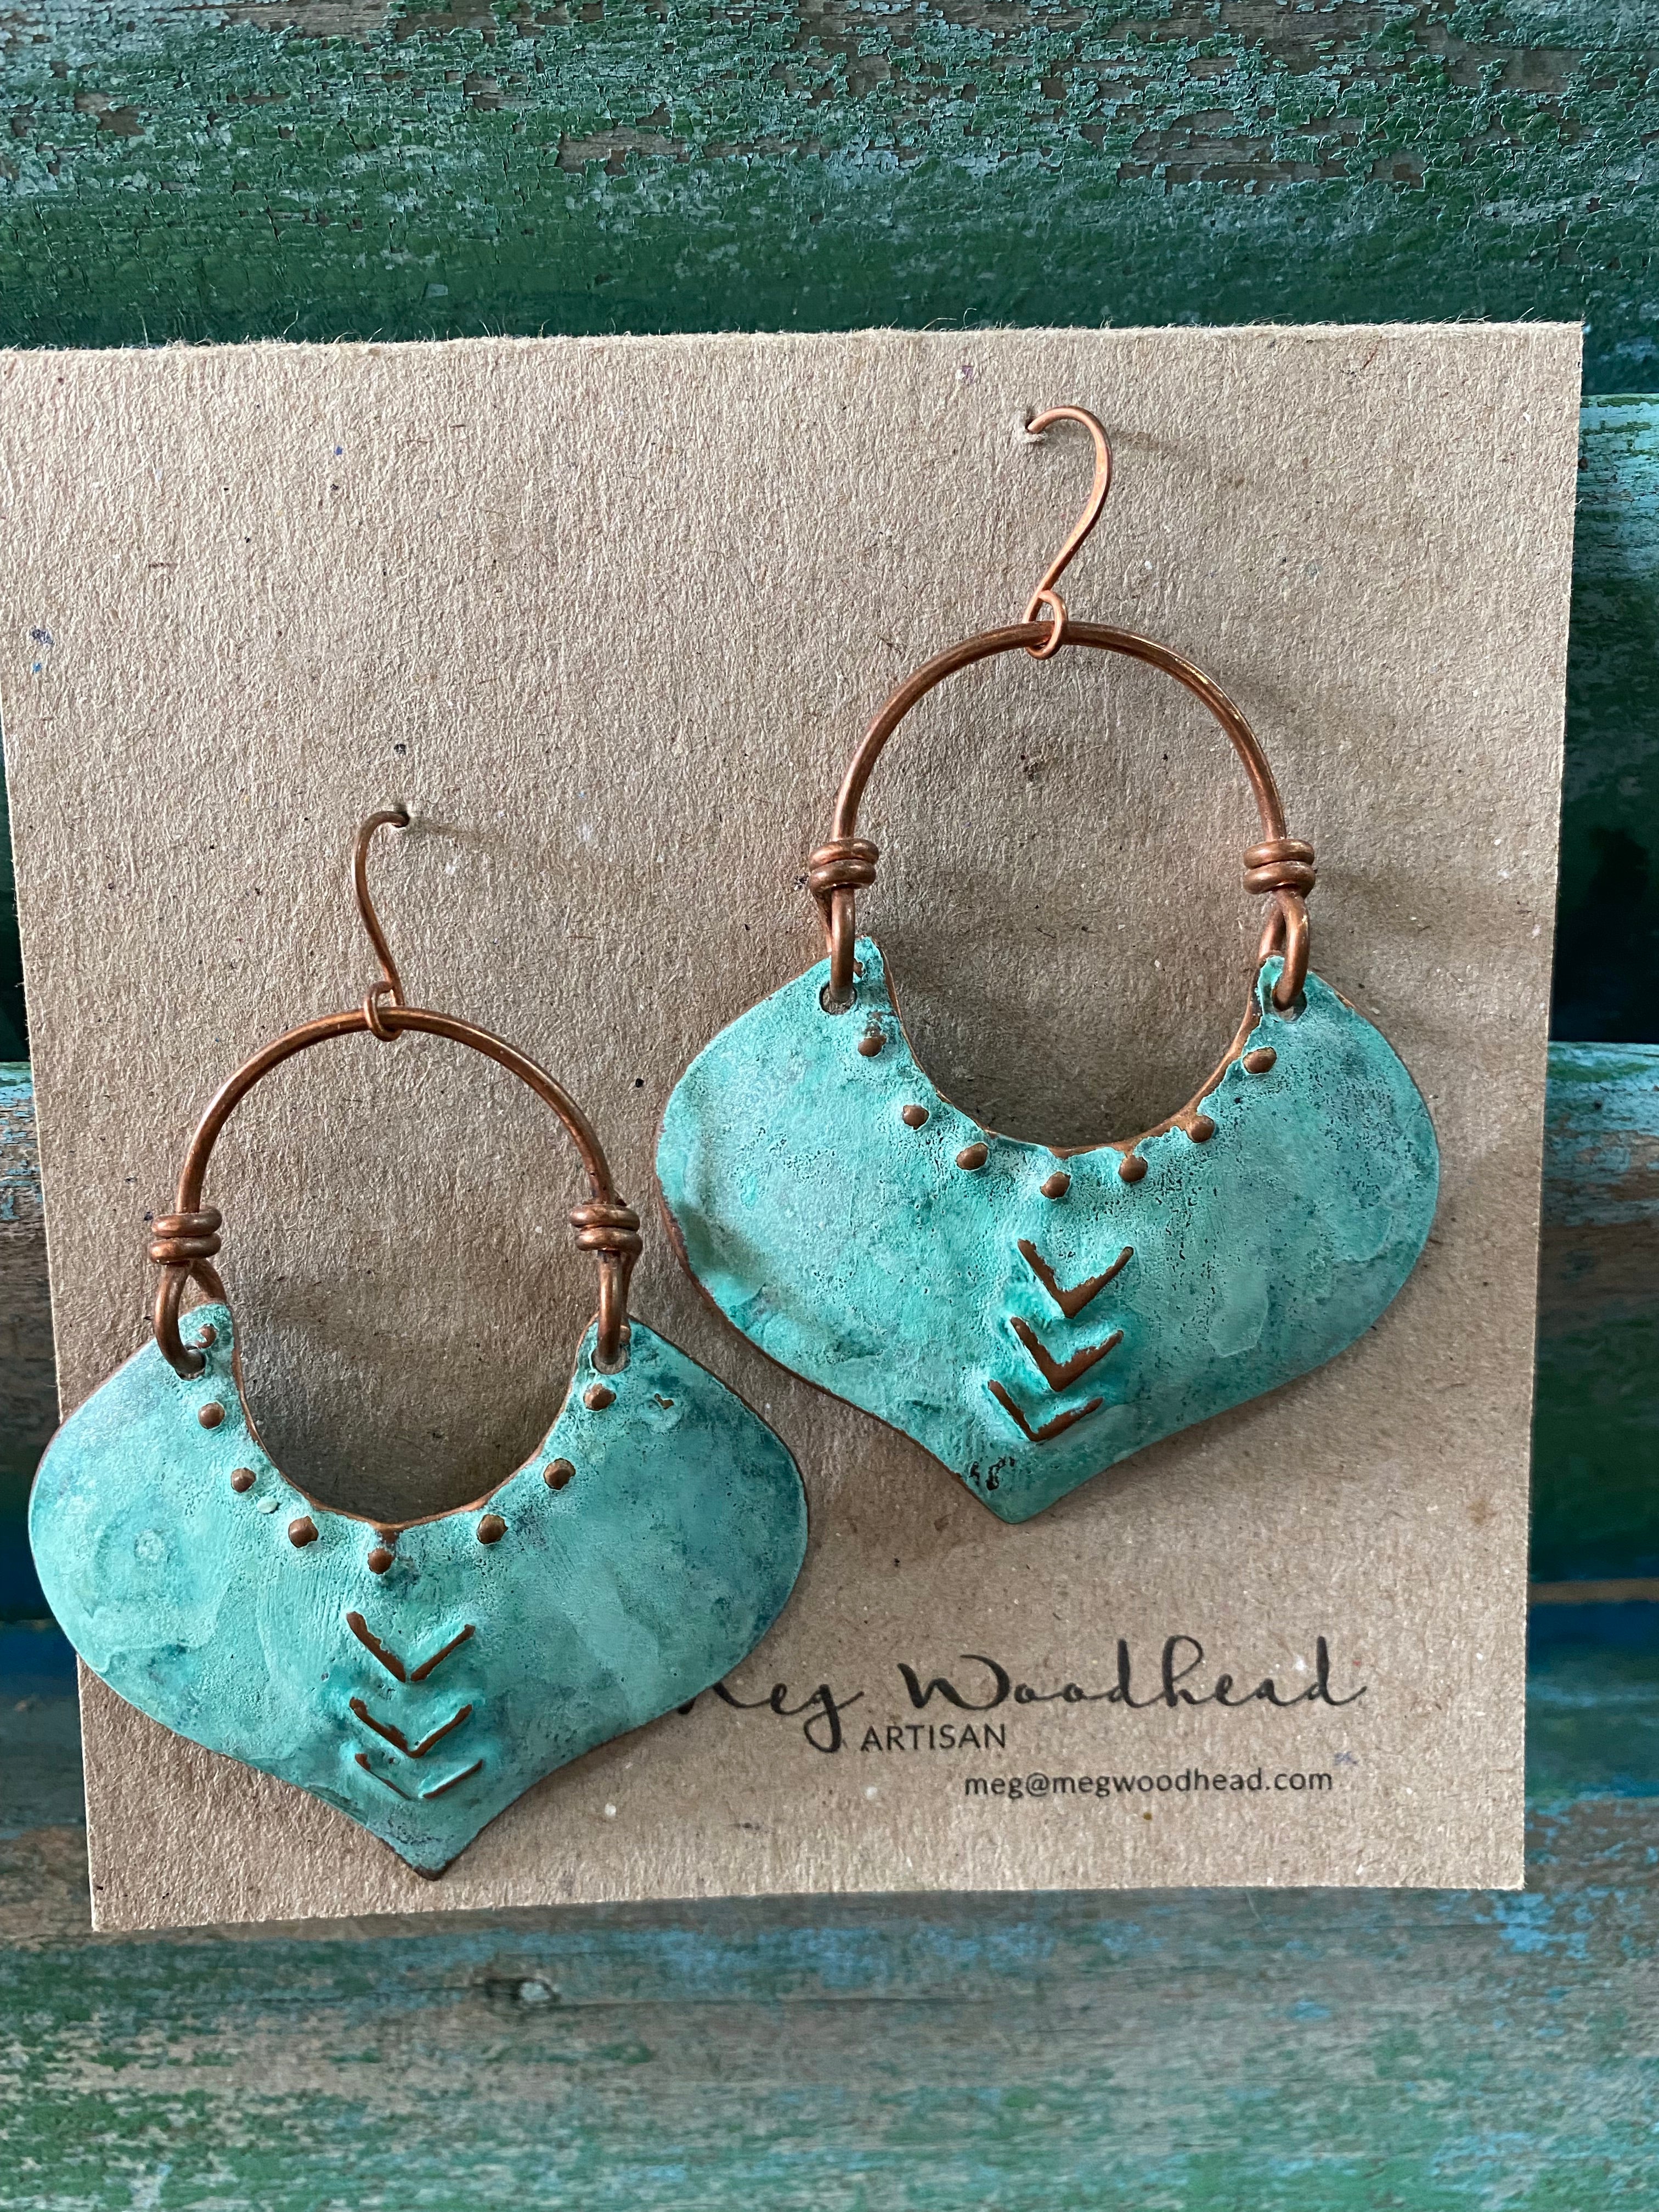 Meg Woodhead Copper Hand Crafted Earrings